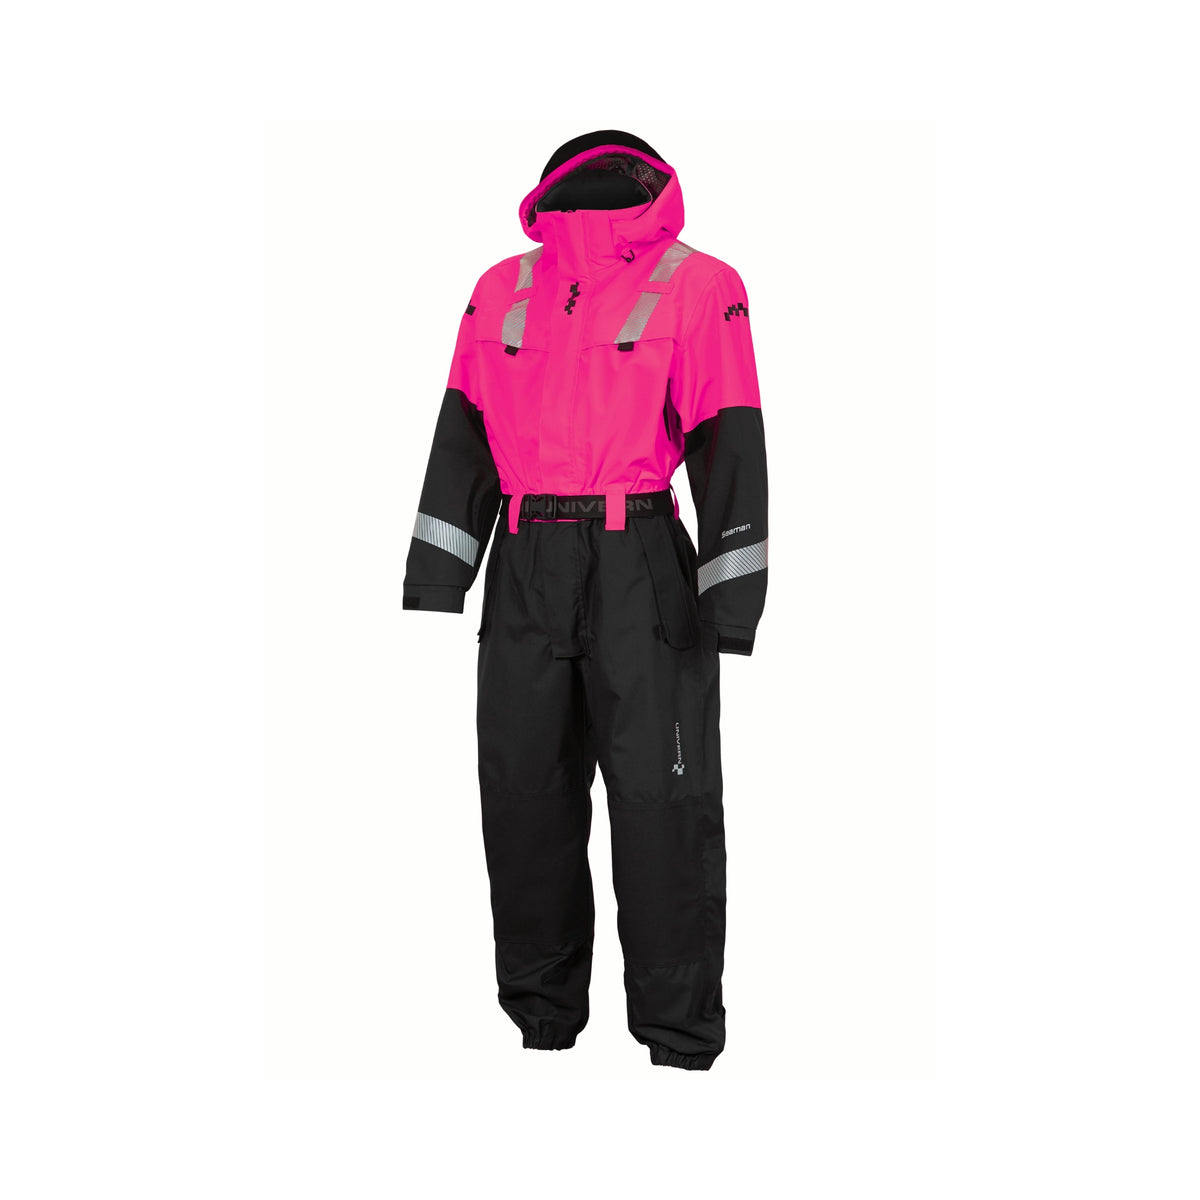 Allværsdress 6565-0423 Protec 2.0 Seaman Project Pink